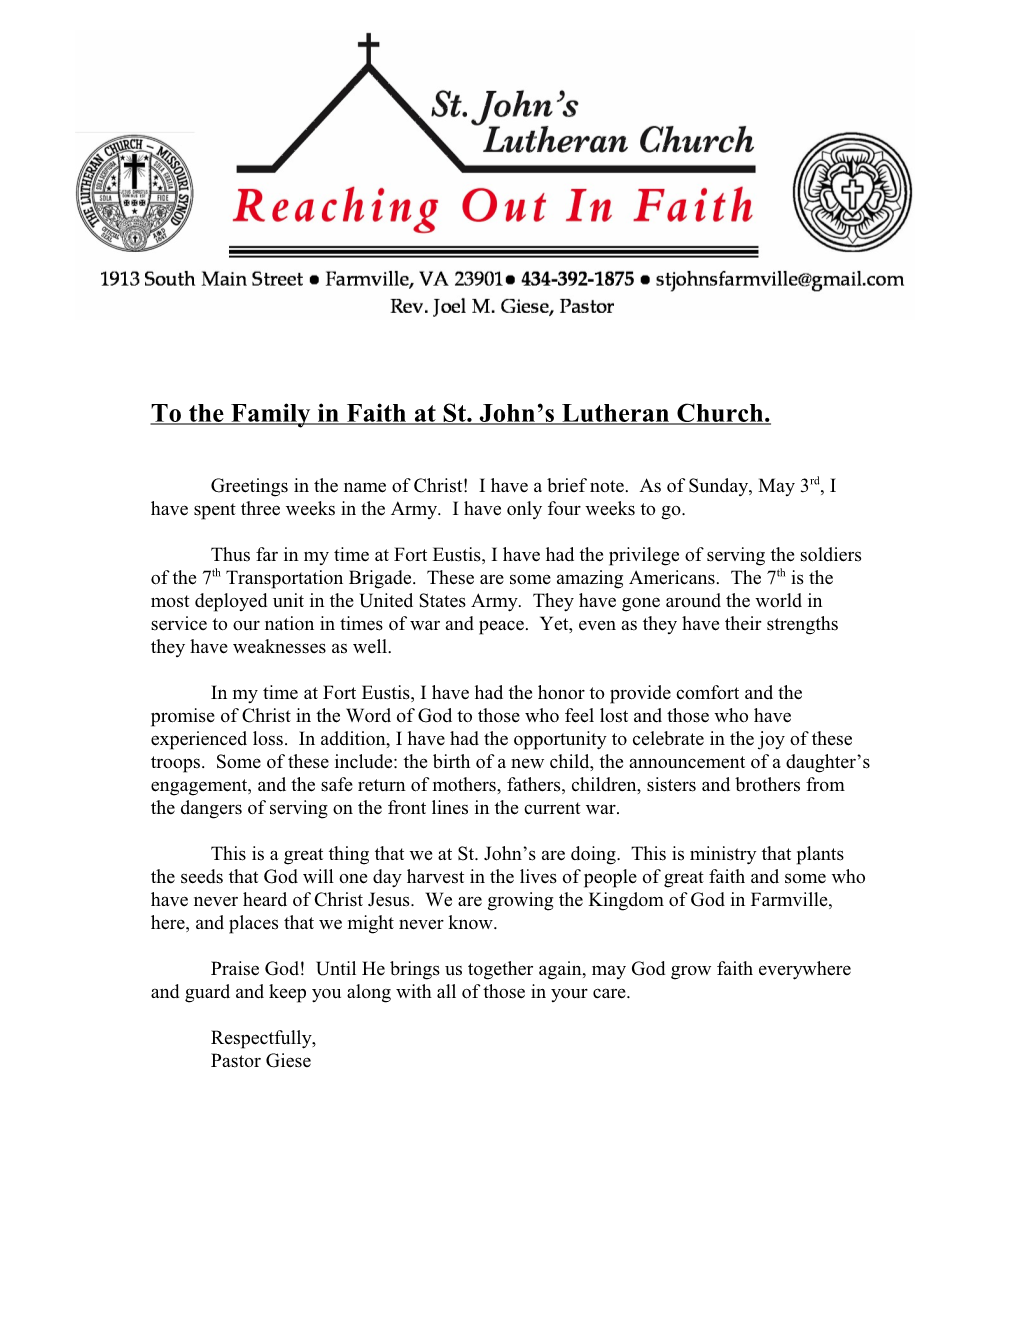 To the Family in Faith at St. John Slutheranchurch